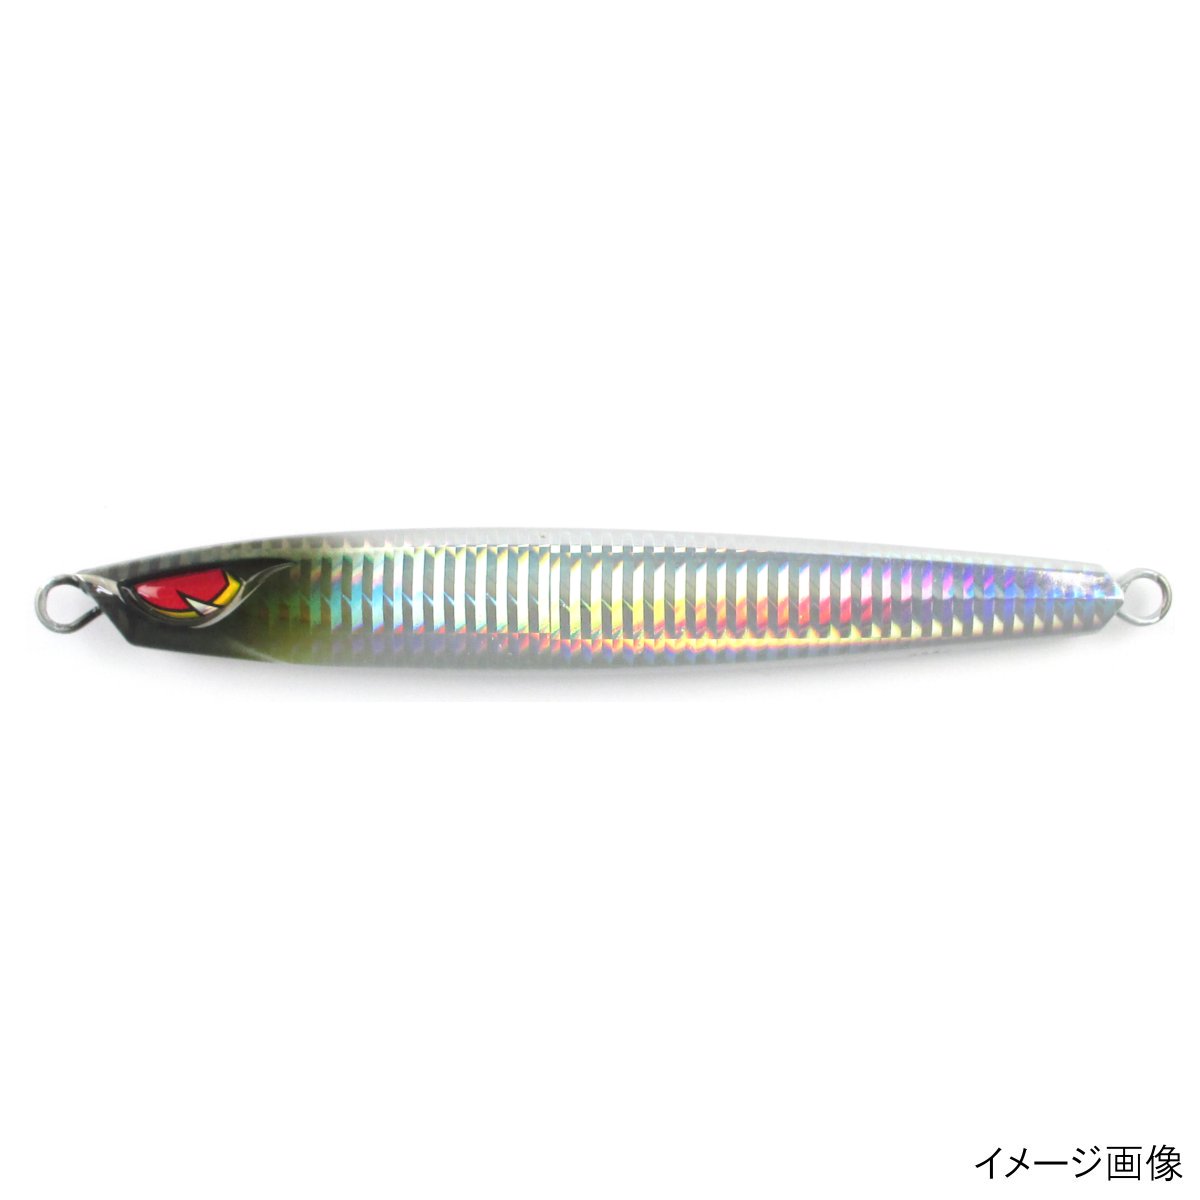 TSURUGIYA 頑鉄JIG 185g シルバー メタルジグの商品画像